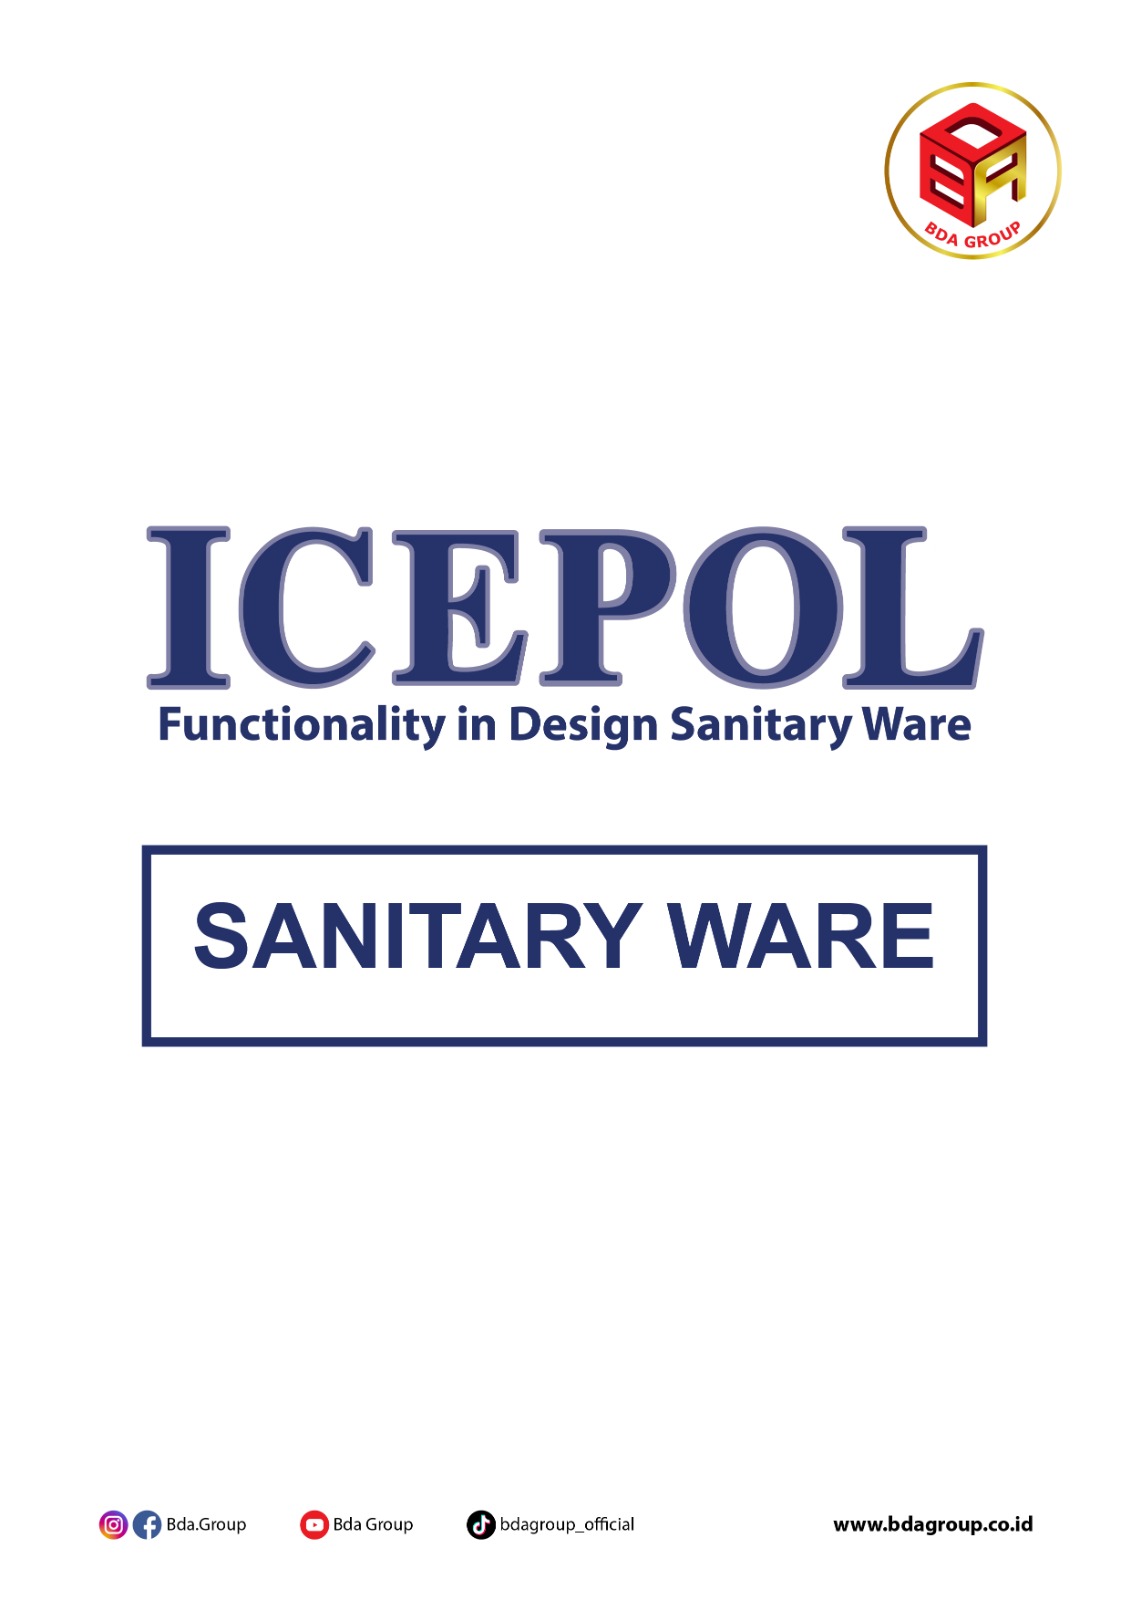 Icepol Sanitary Ware